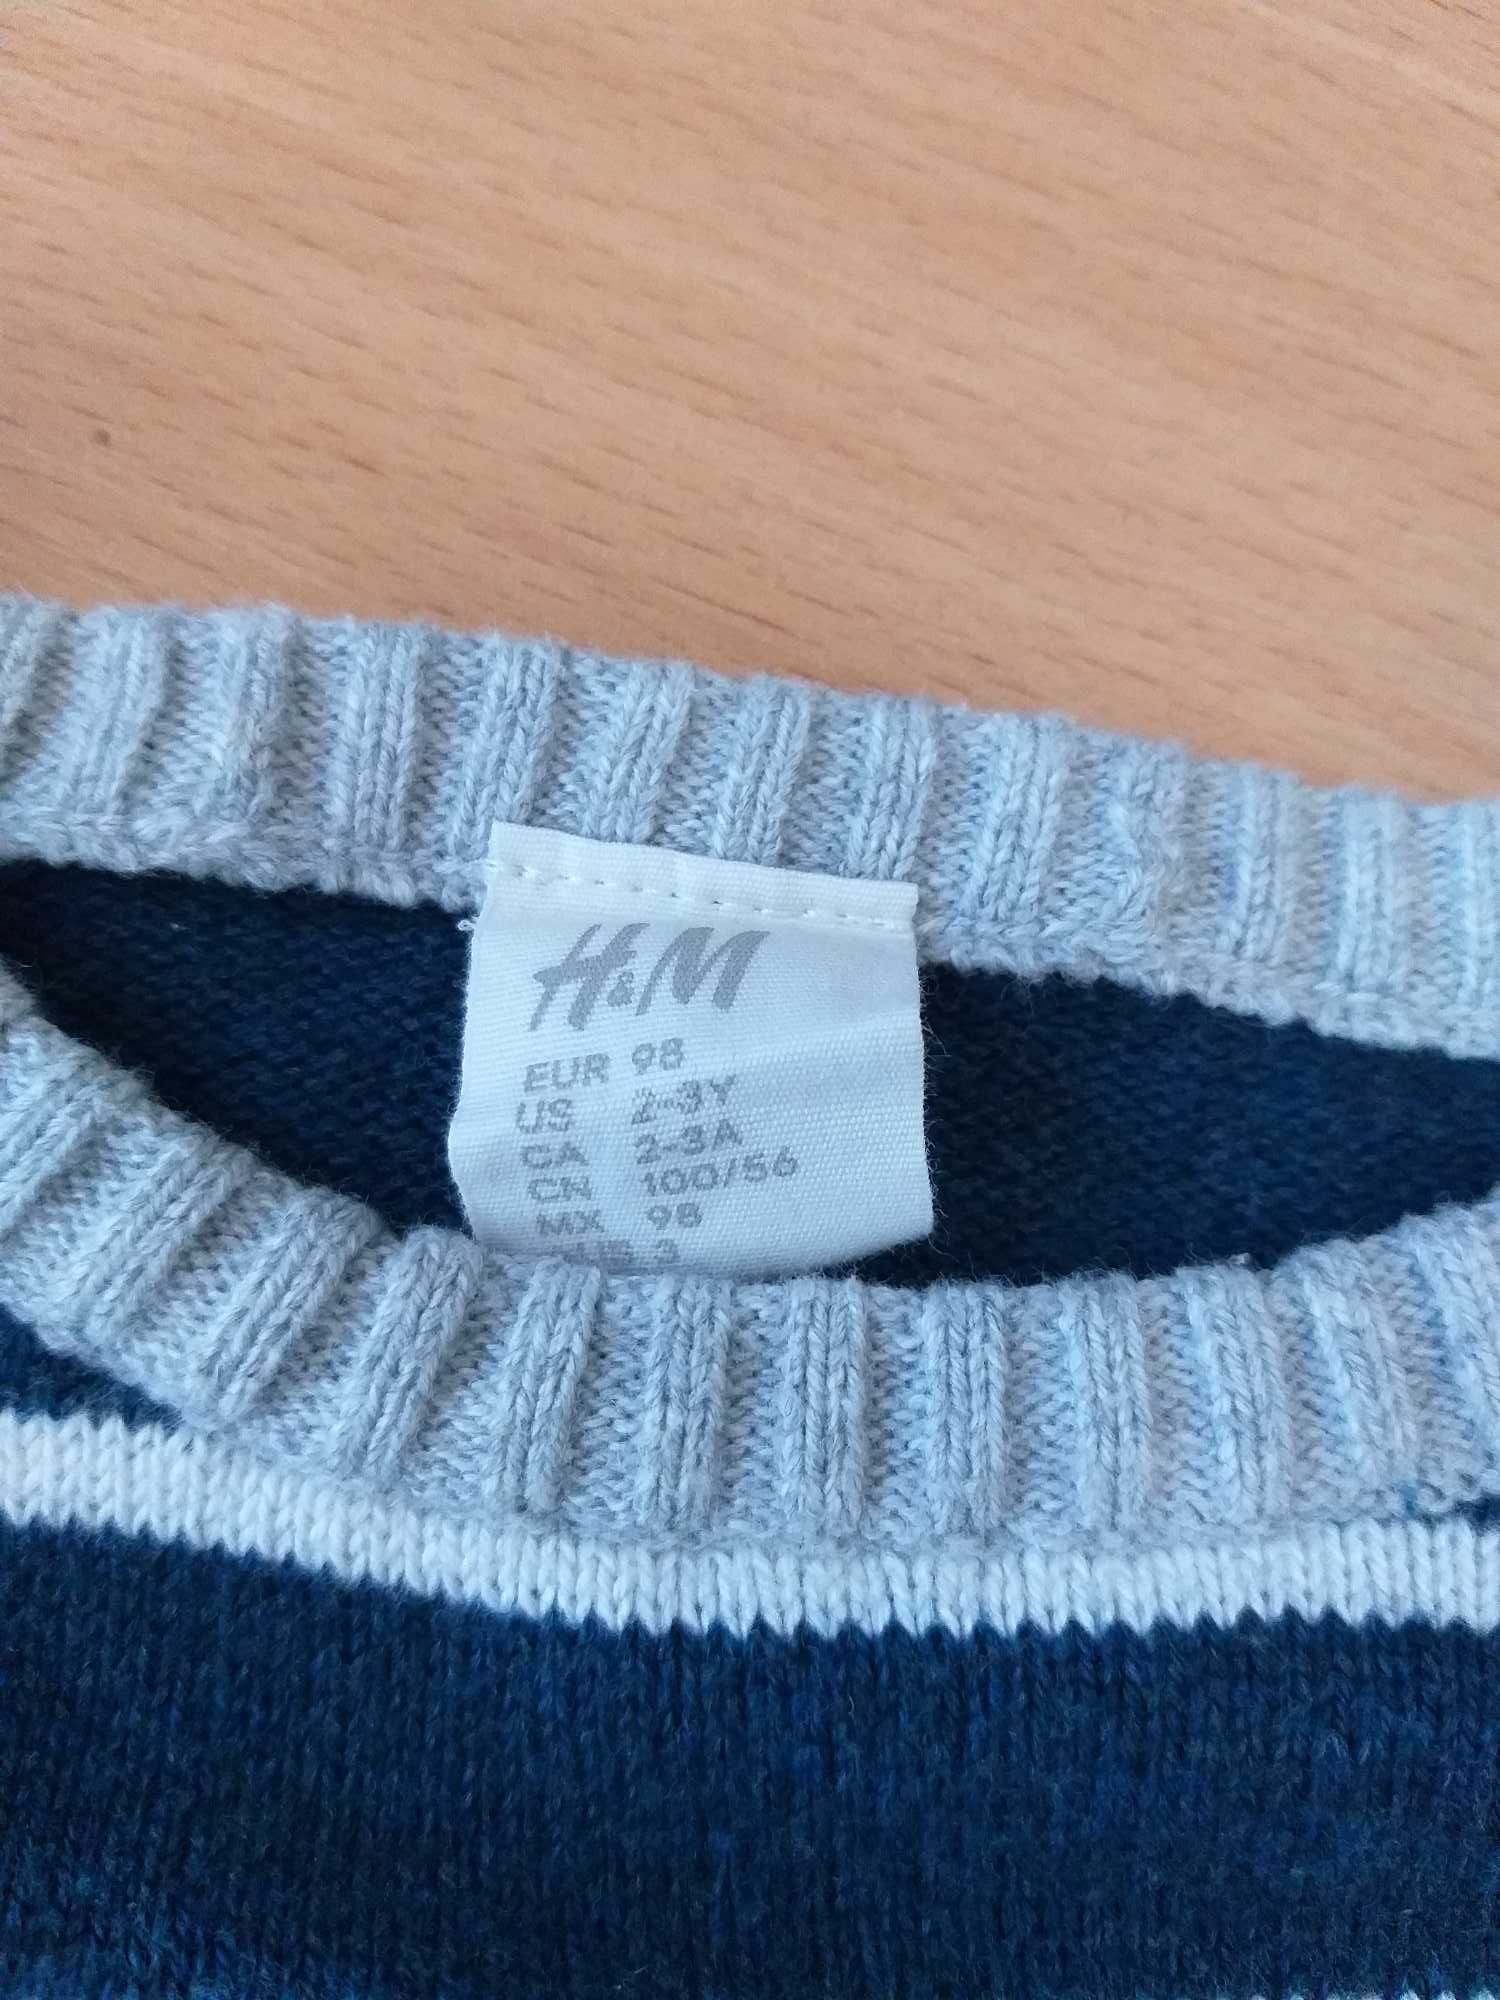 H&M 2-3 92-98 свитер кофта реглан футболка